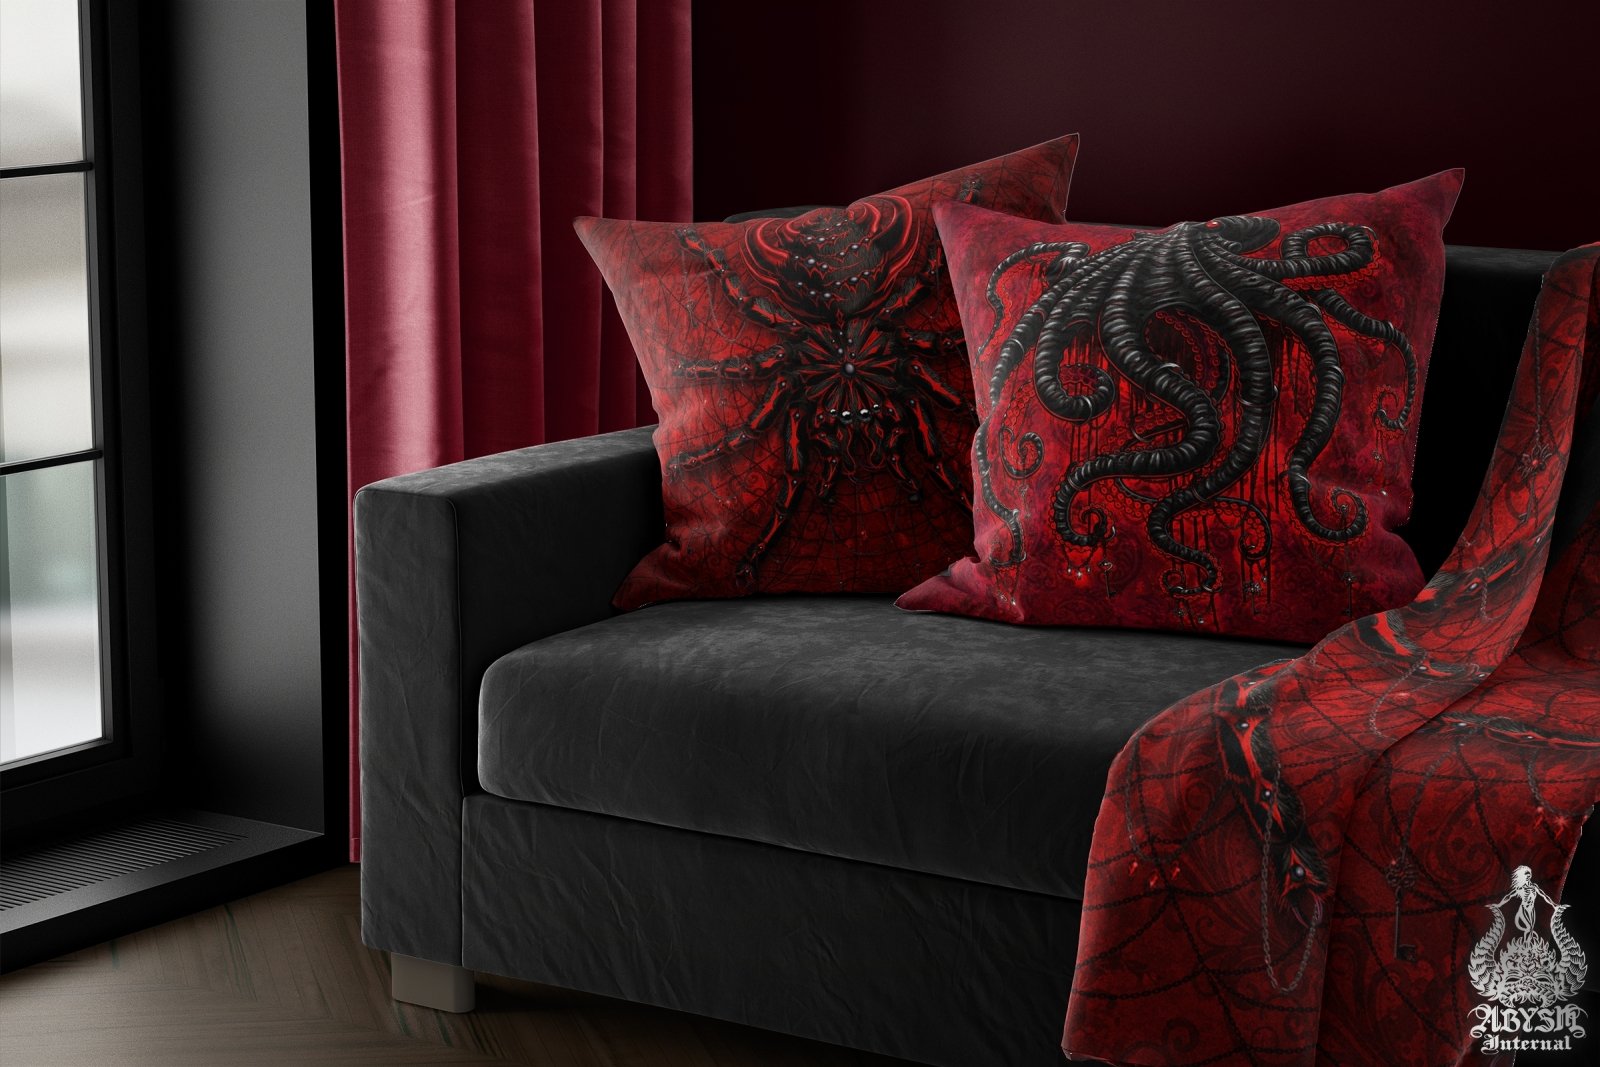 Gothic Throw Pillow, Decorative Accent Cushion, Goth Room Decor, Dark Art, Alternative Home - Tarantula, Bloody Black Spider - Abysm Internal